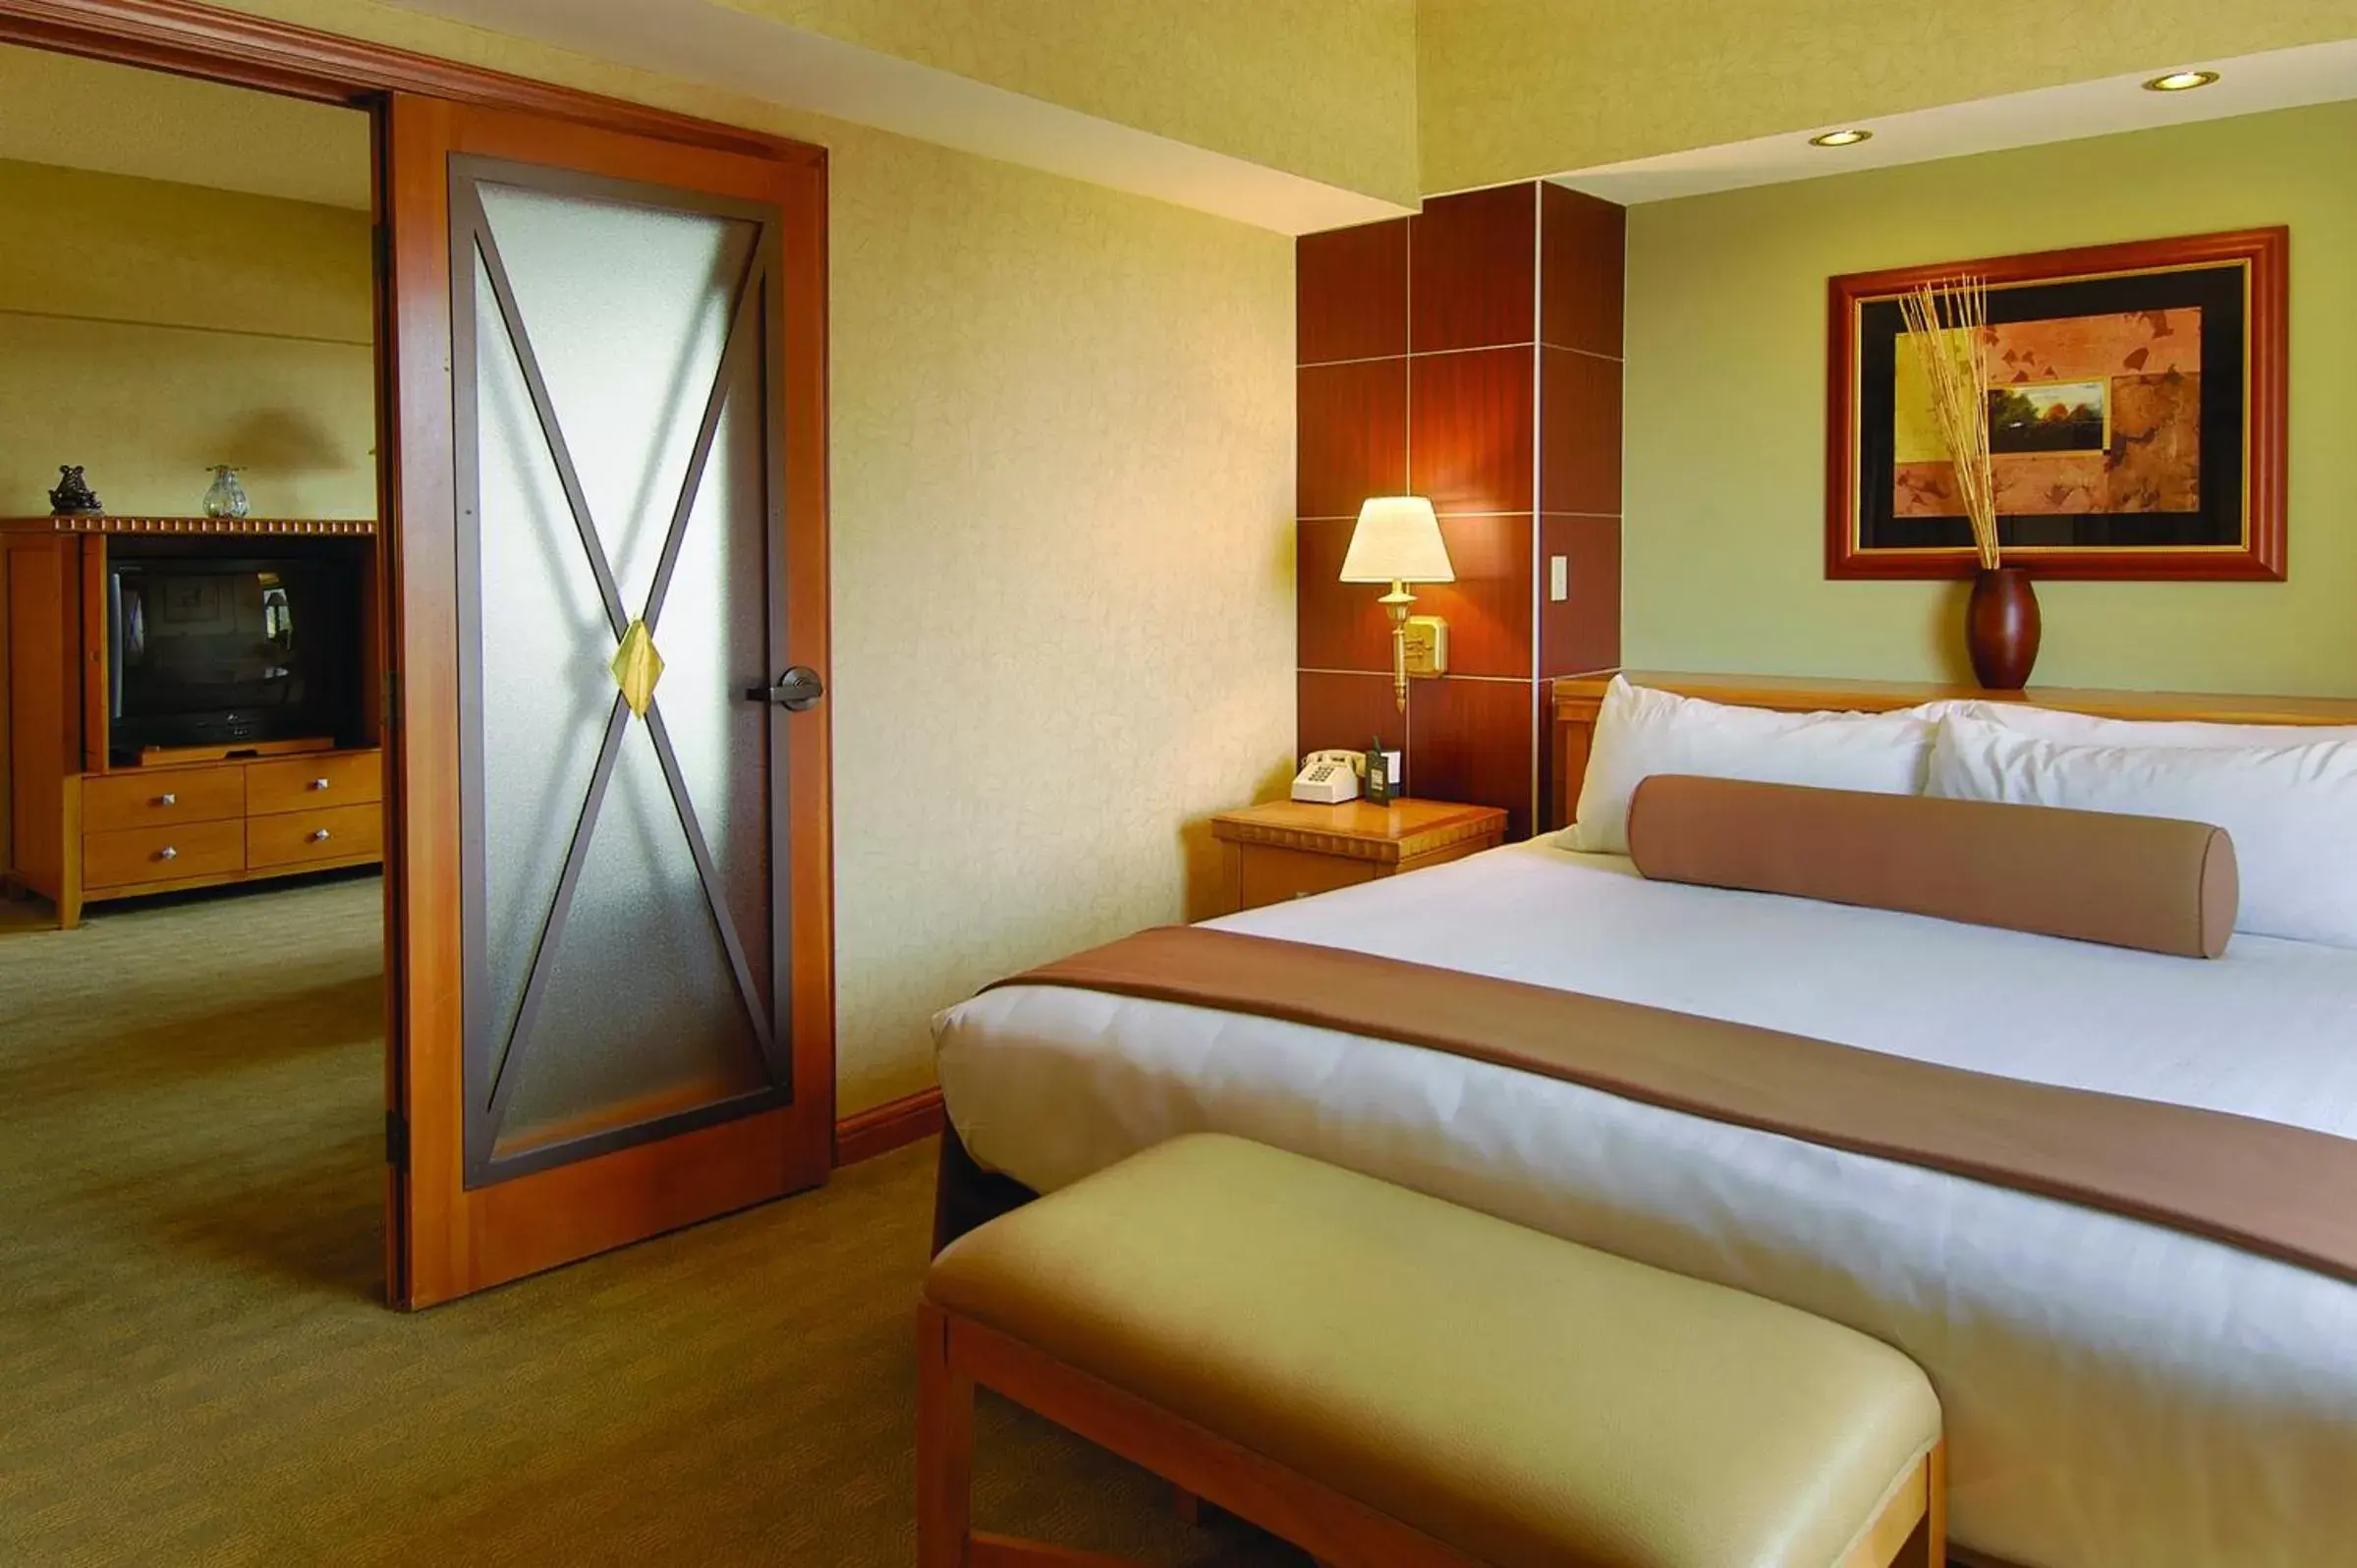 Executive Hospitality Suite 1 King Non-Smoking in Harveys Lake Tahoe Hotel & Casino